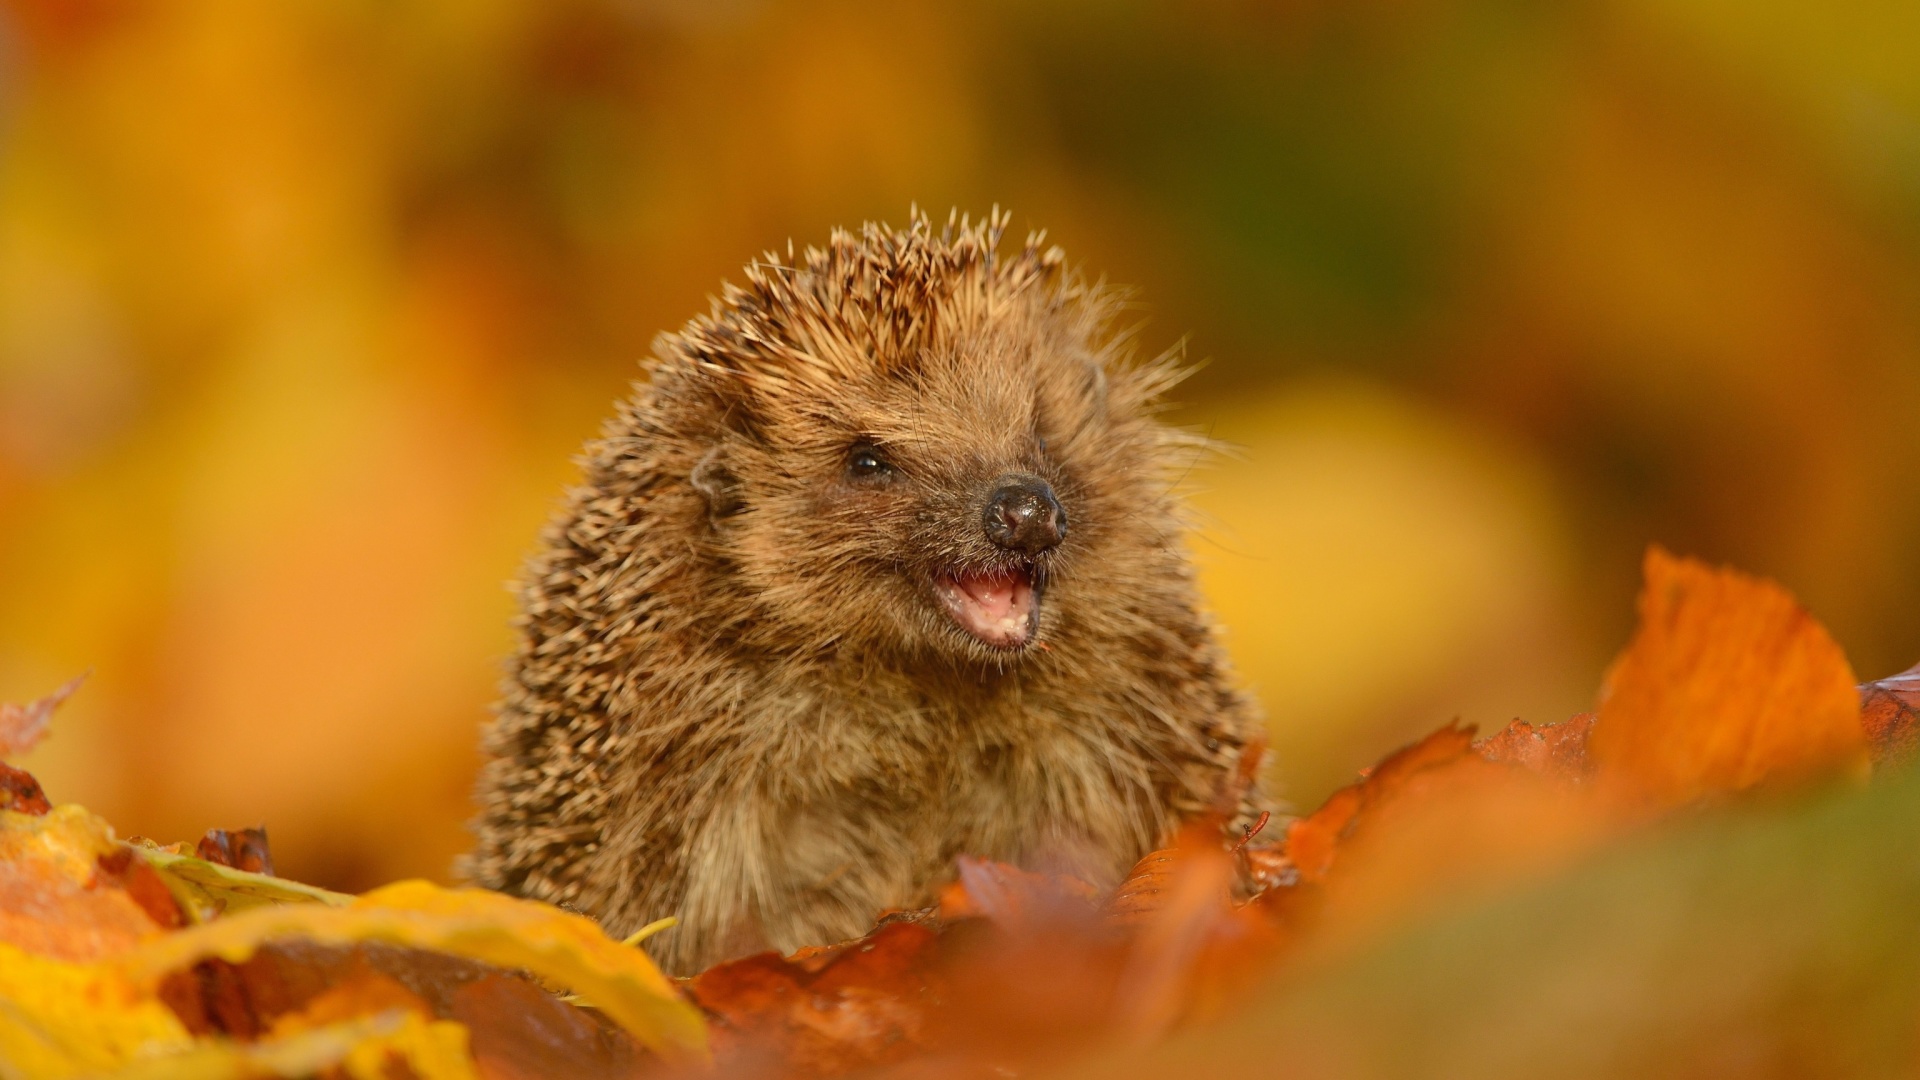 Hedgehog in Autumn Leaves wallpaper 1920x1080